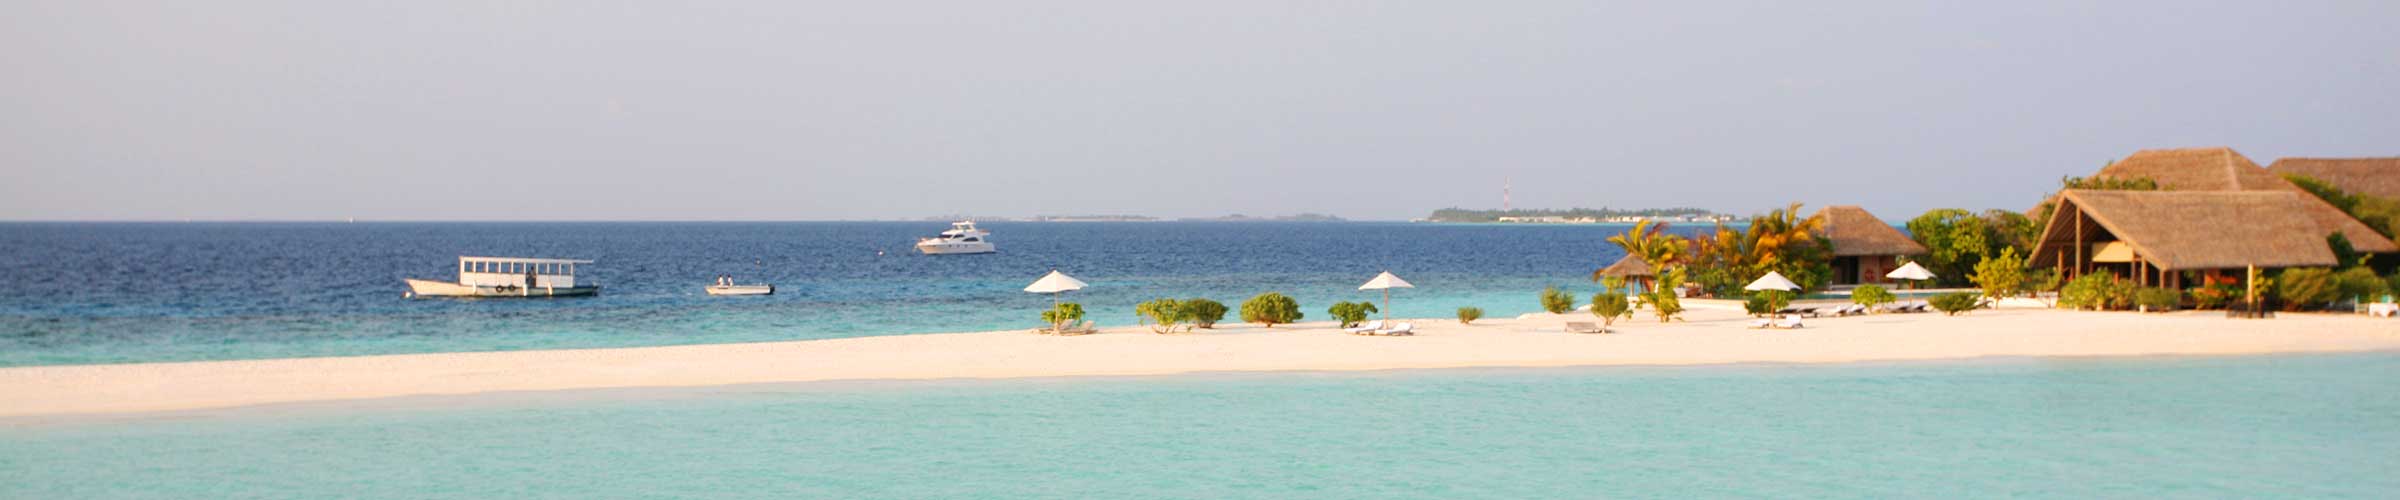 Maldives lagoon and beach scene